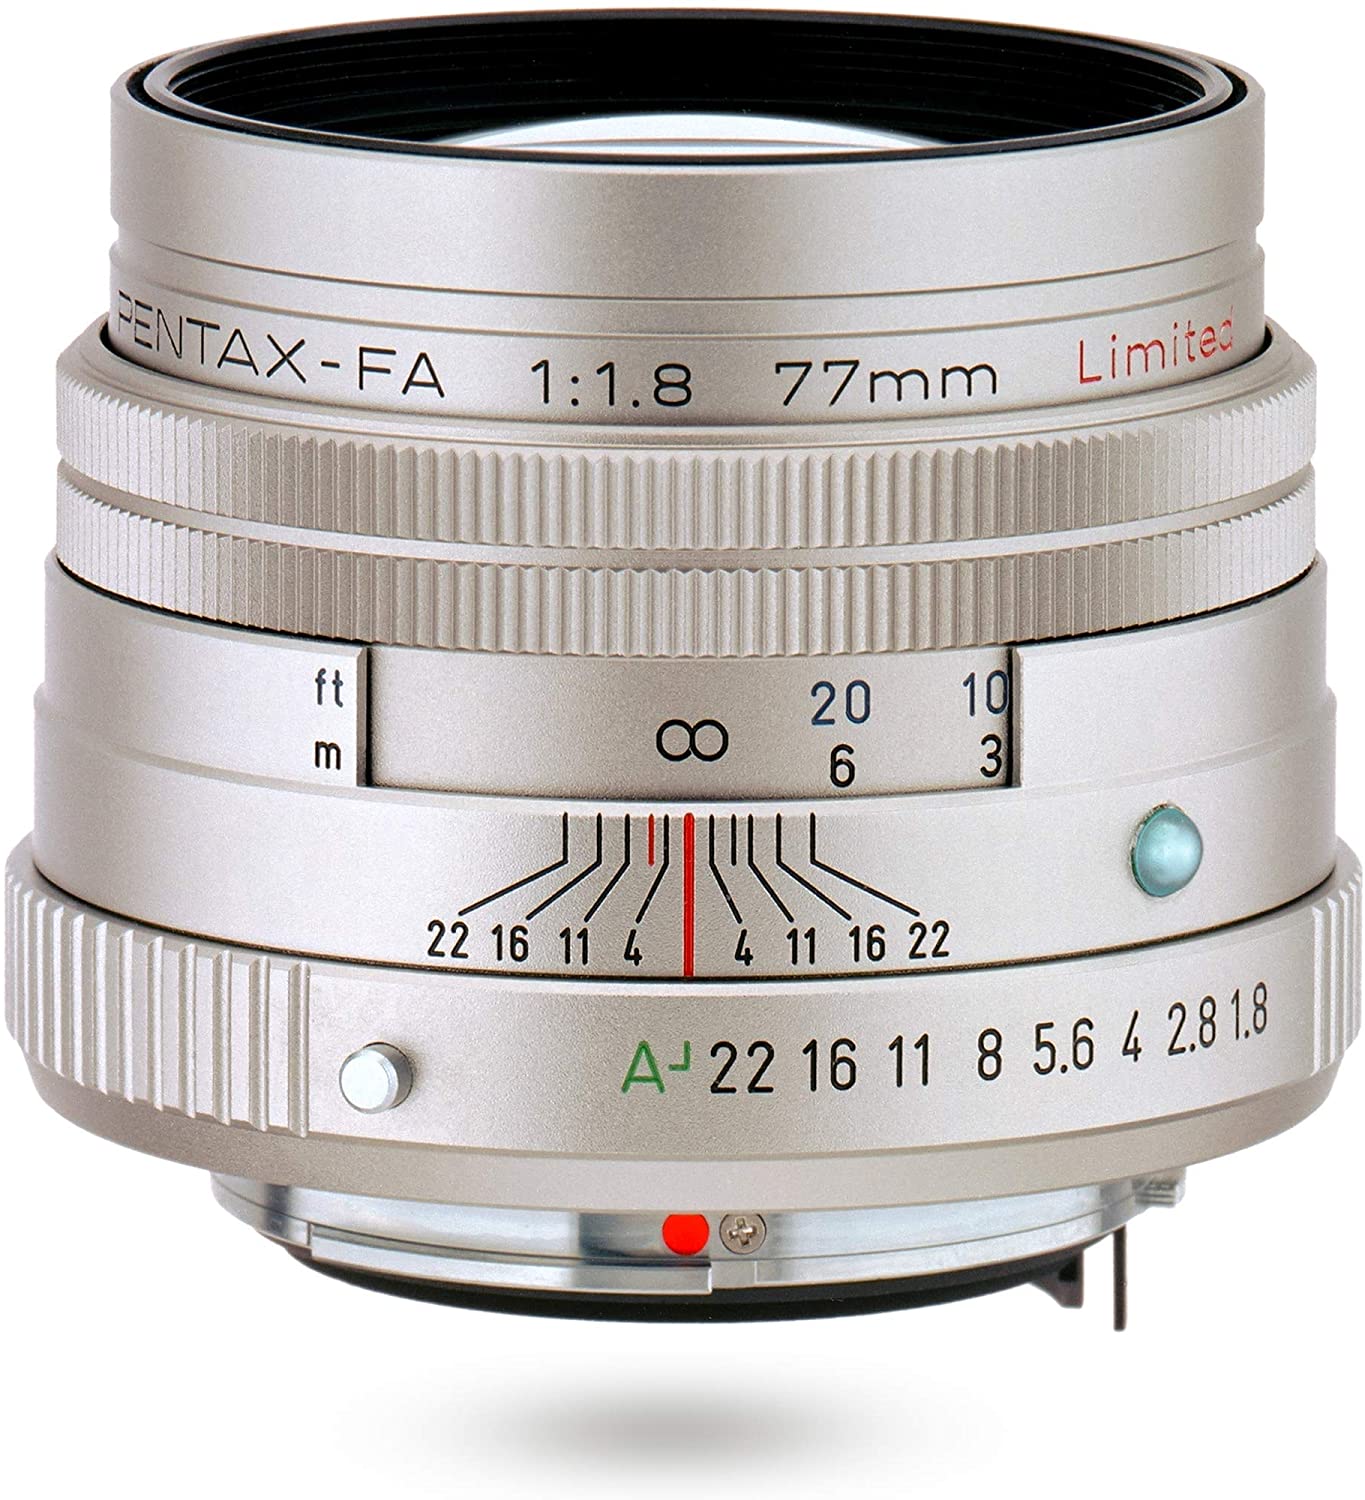 smc PENTAX-FA 77mmF1.8 Limited Silver Limited Lens Medium